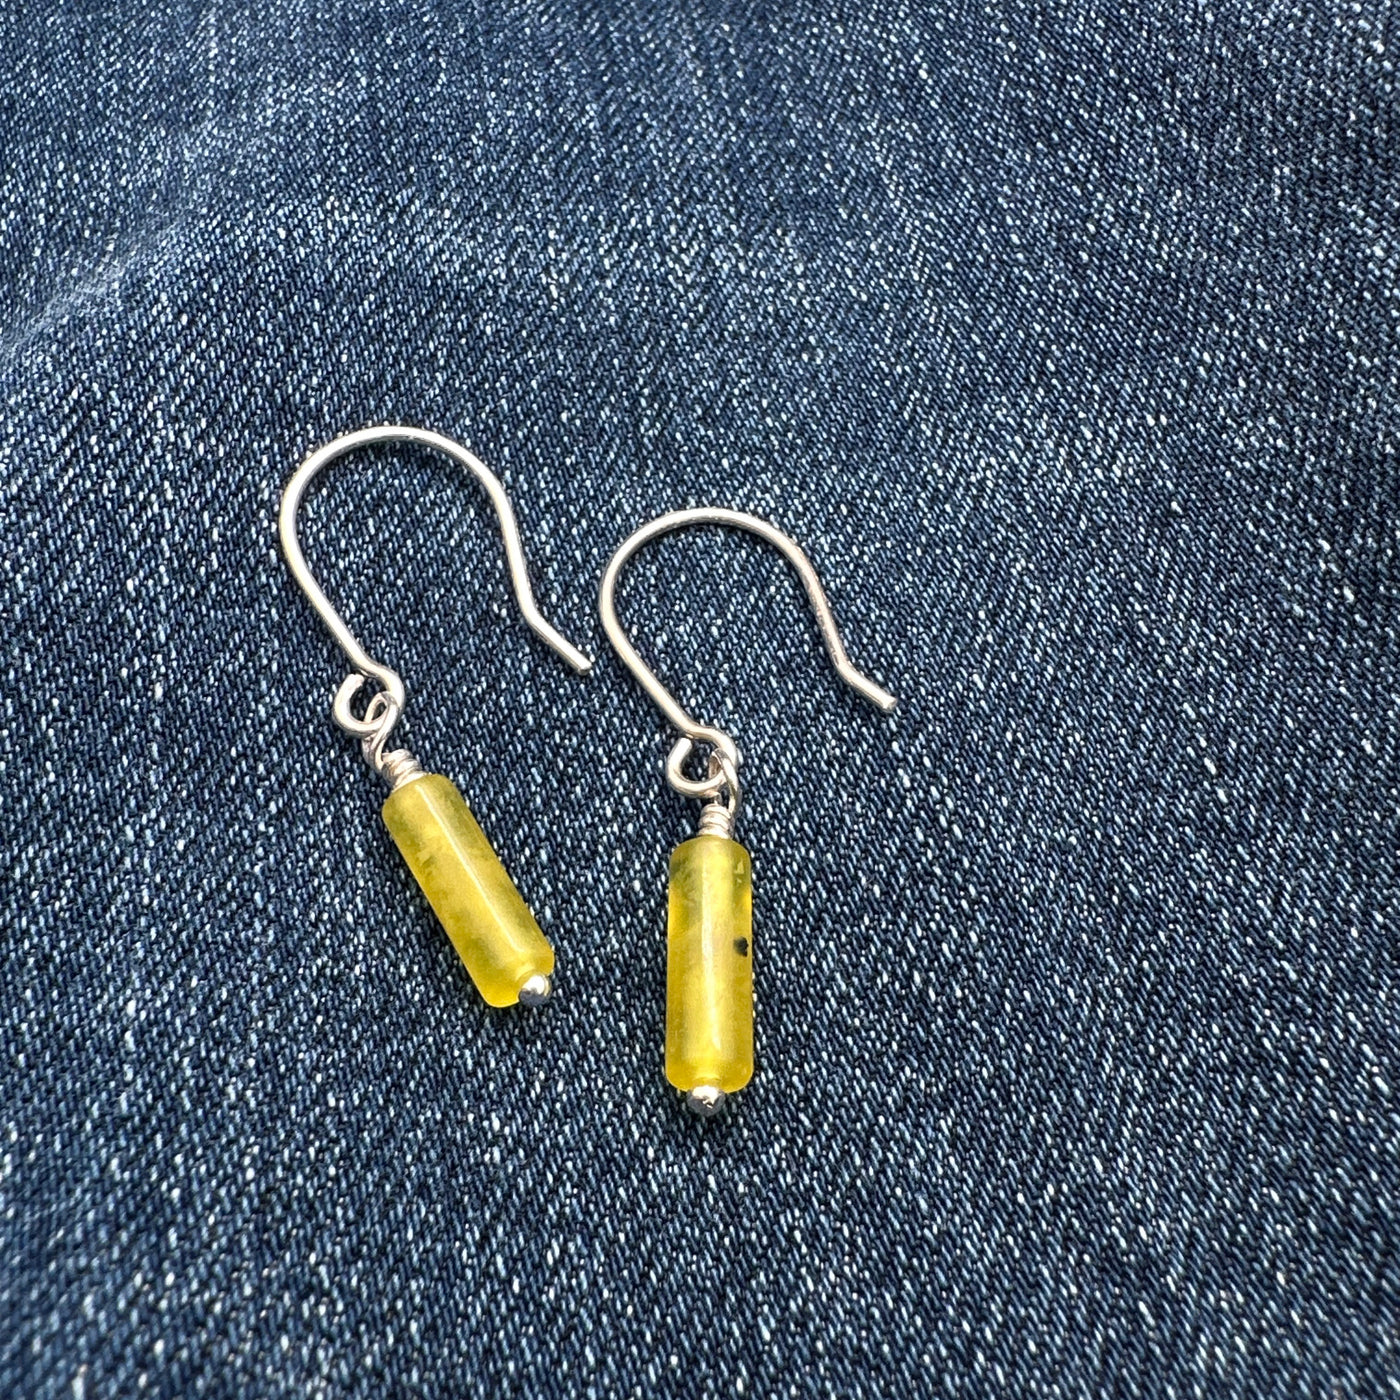 Silver and jade earrings